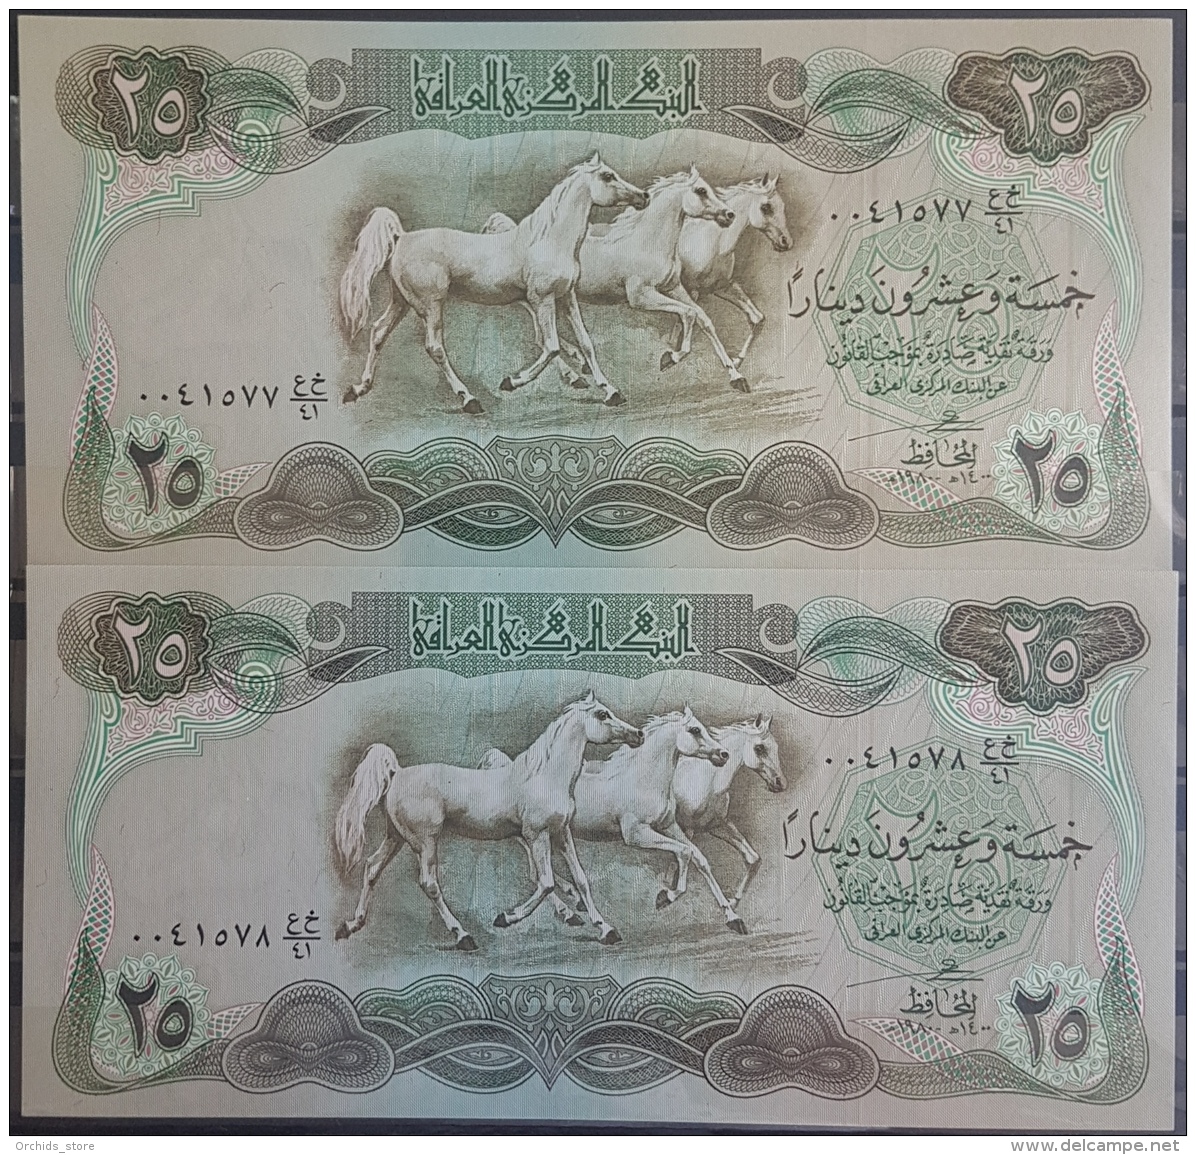 AU10 - Iraq 1980 Banlnote 25 Dinars X2 - P66 - Swiss Print - 3 Horses - UNC - 2 Consecutive Serial Numbers - Iraq